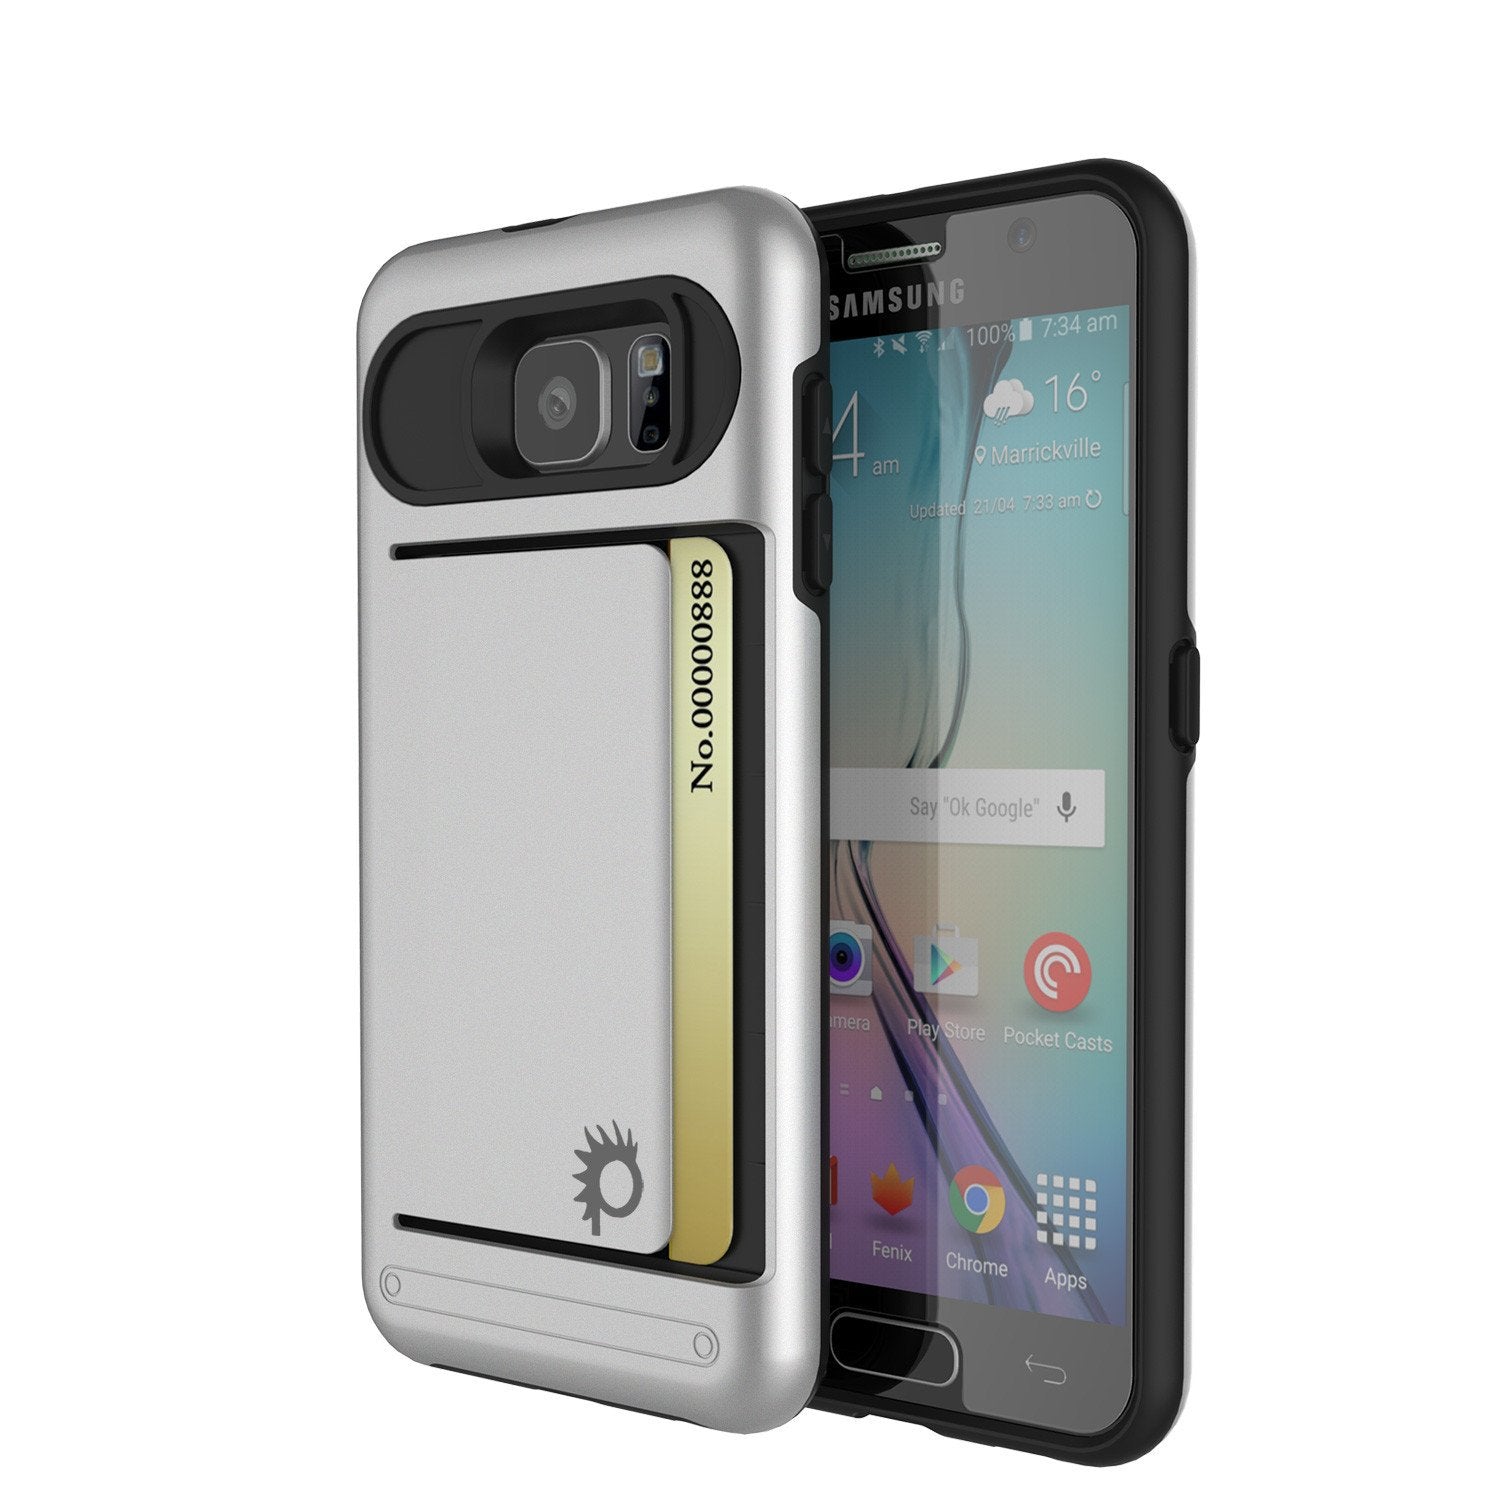 Galaxy S6 EDGE Case PunkCase CLUTCH Silver Series Slim Armor Soft Cover Case w/ Screen Protector